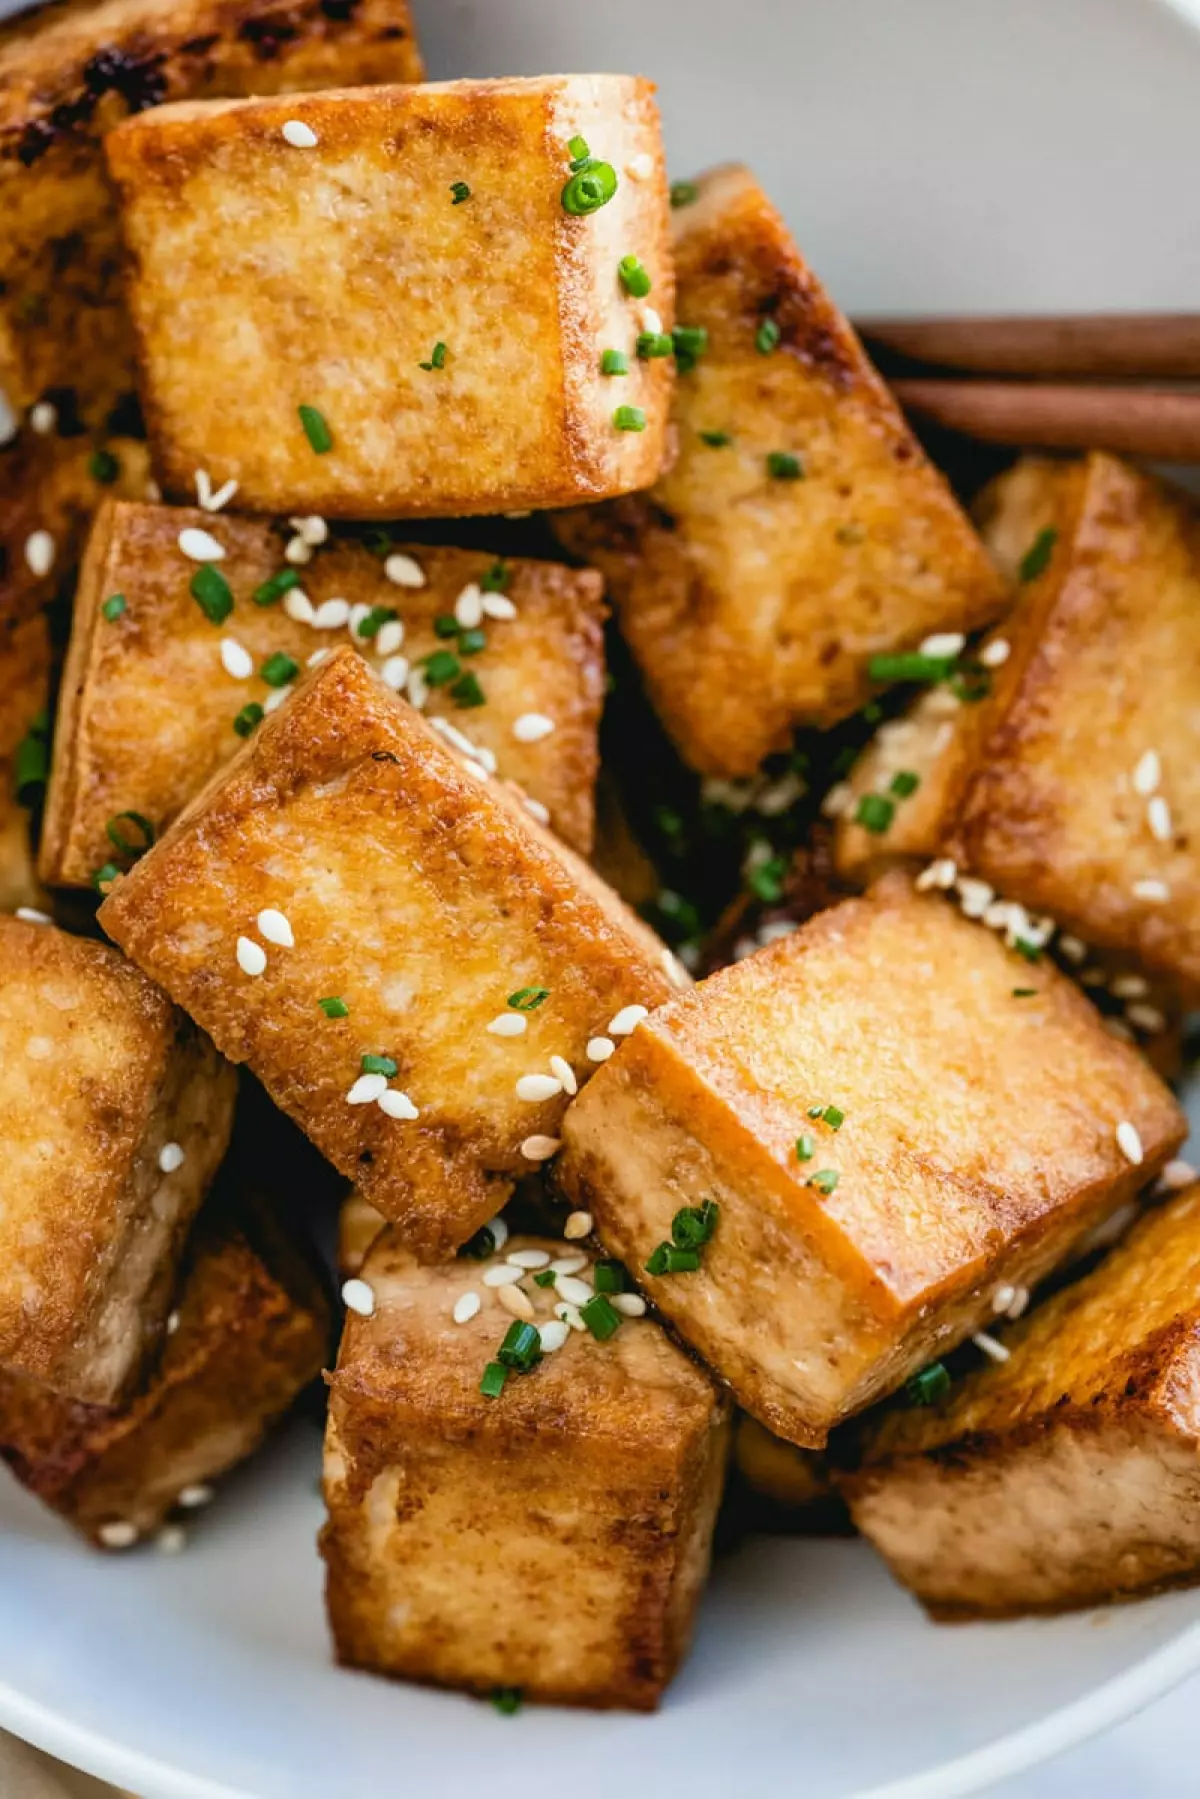 Pan fried tofu